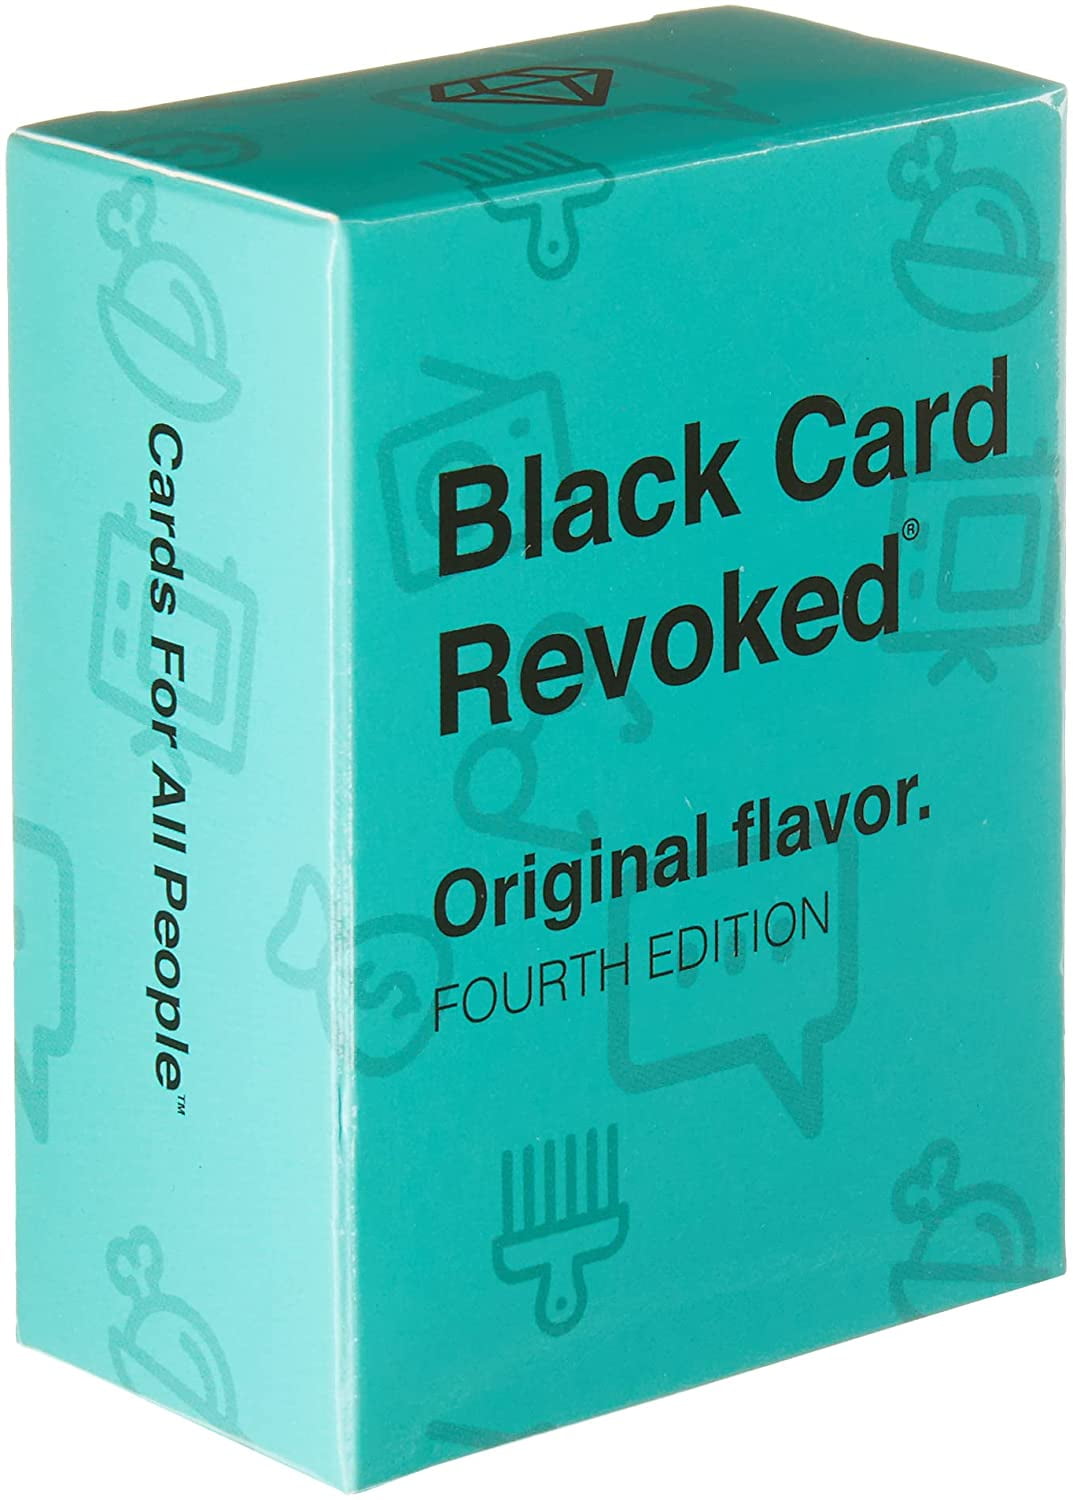 Black Card Revoked - Second Edition